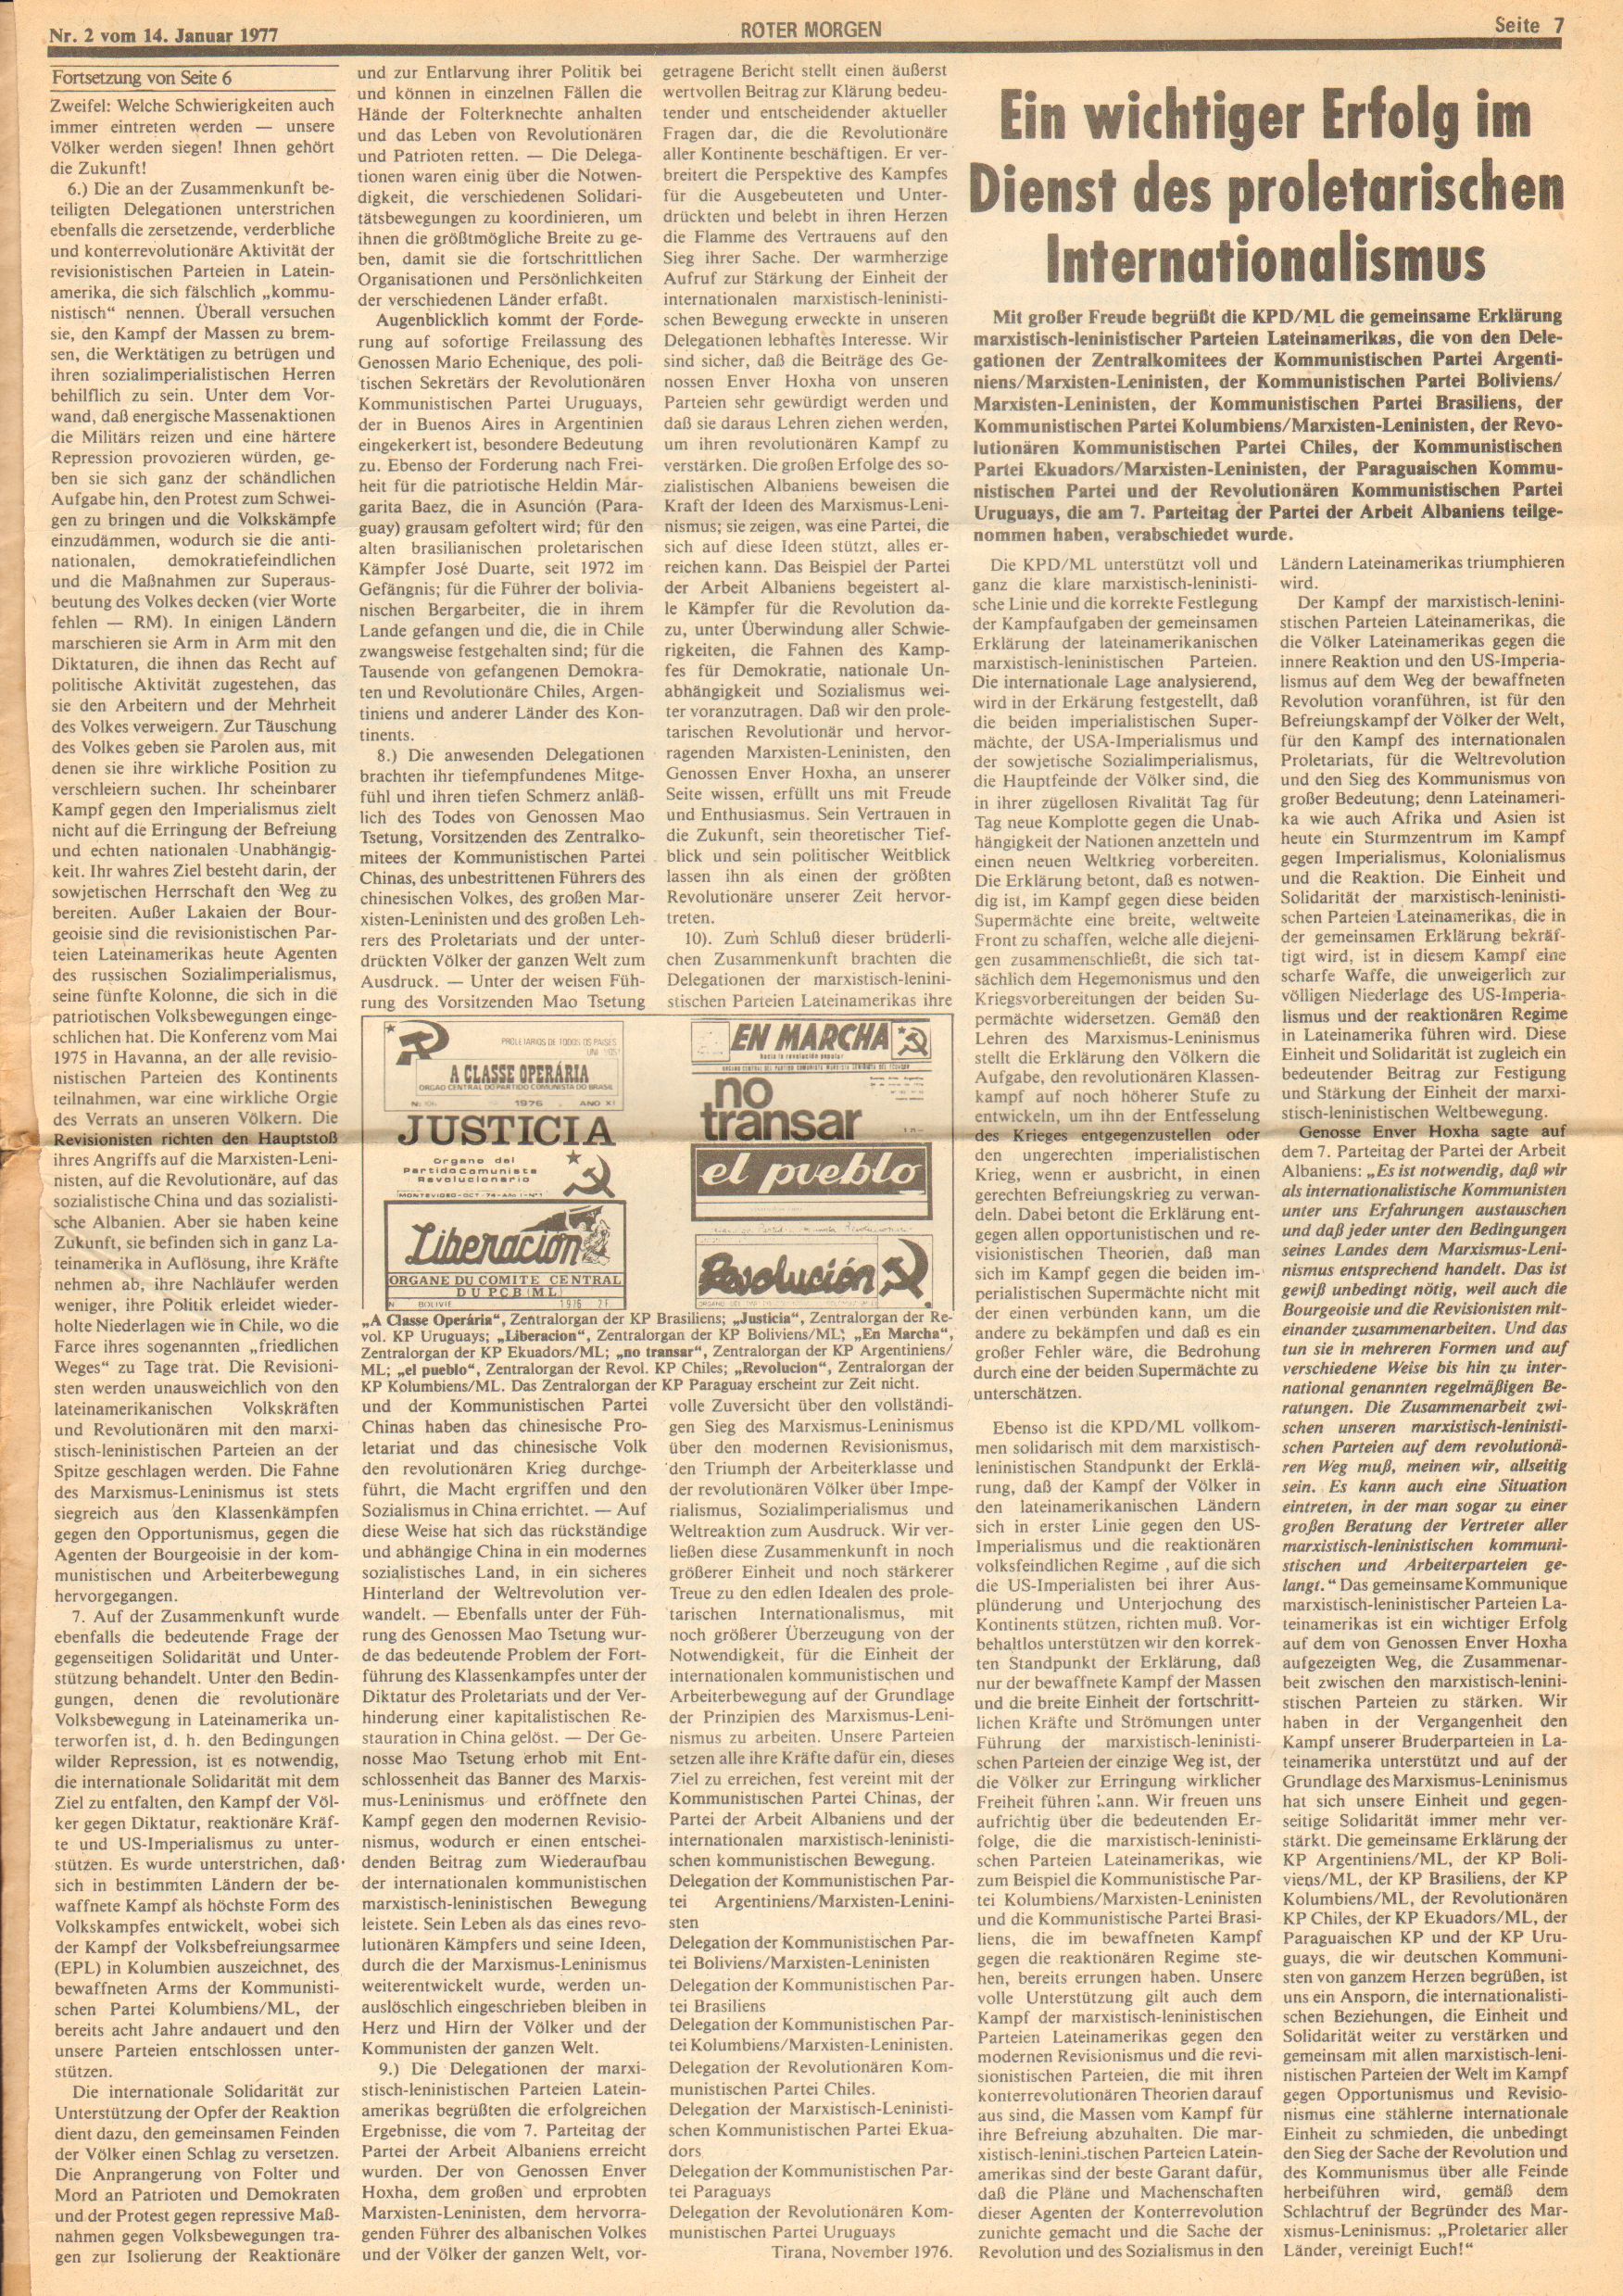 Roter Morgen, 11. Jg., 14. Januar 1977, Nr. 2, Seite 7